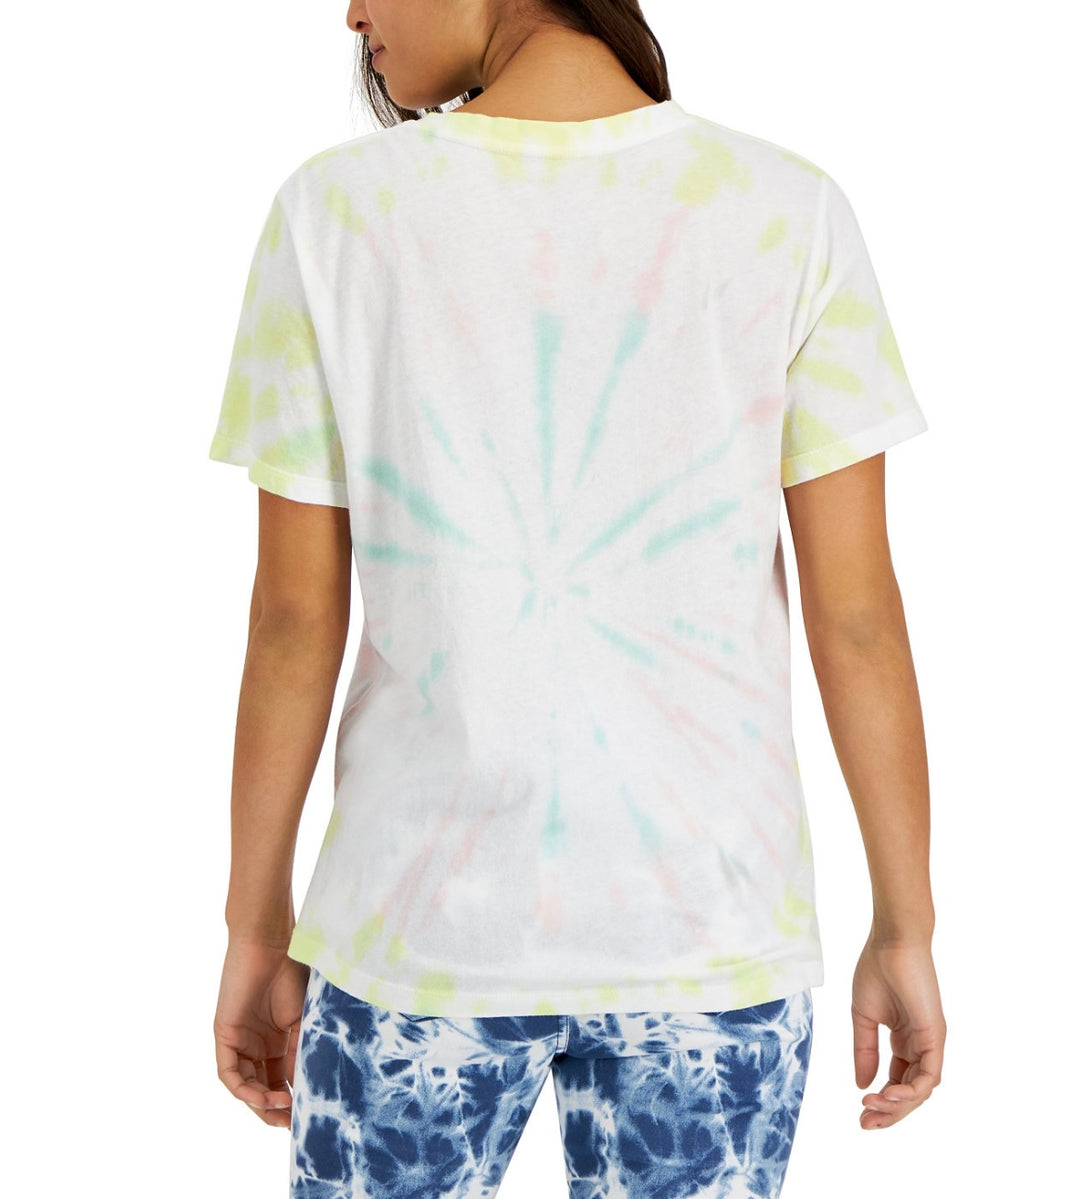 Grayson Threads Black Juniors' Cotton Tie-Dyed Graphic-Print T-Shirt Size M